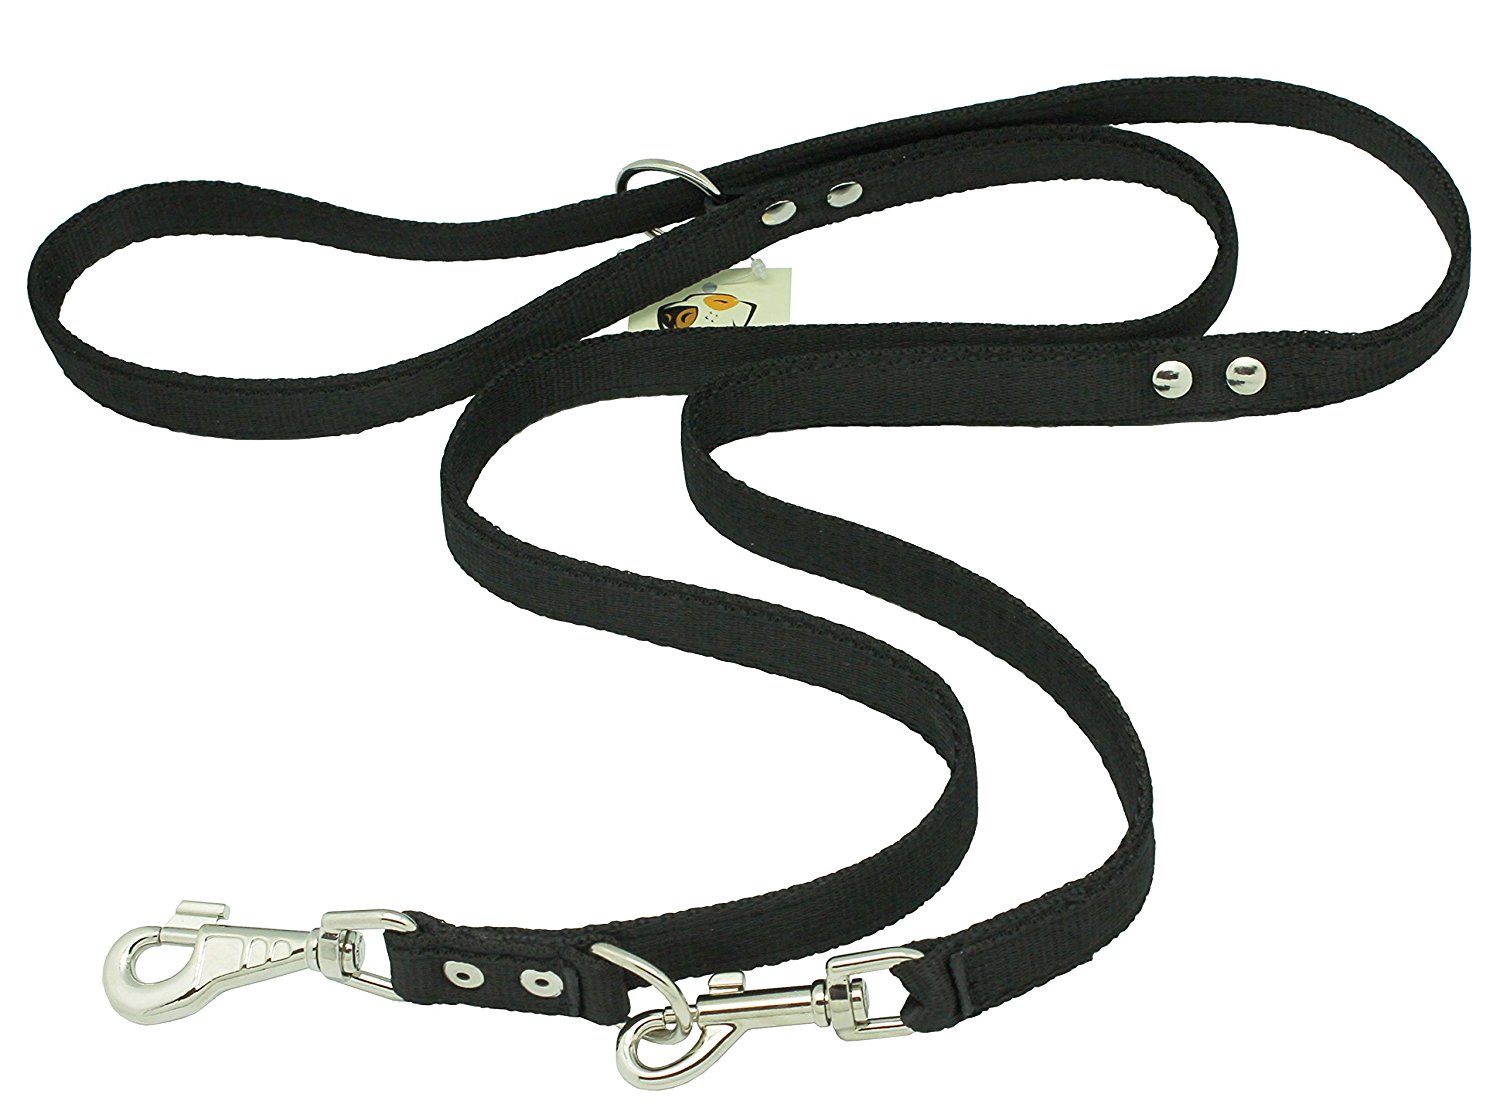 Service dog hands-free leash.